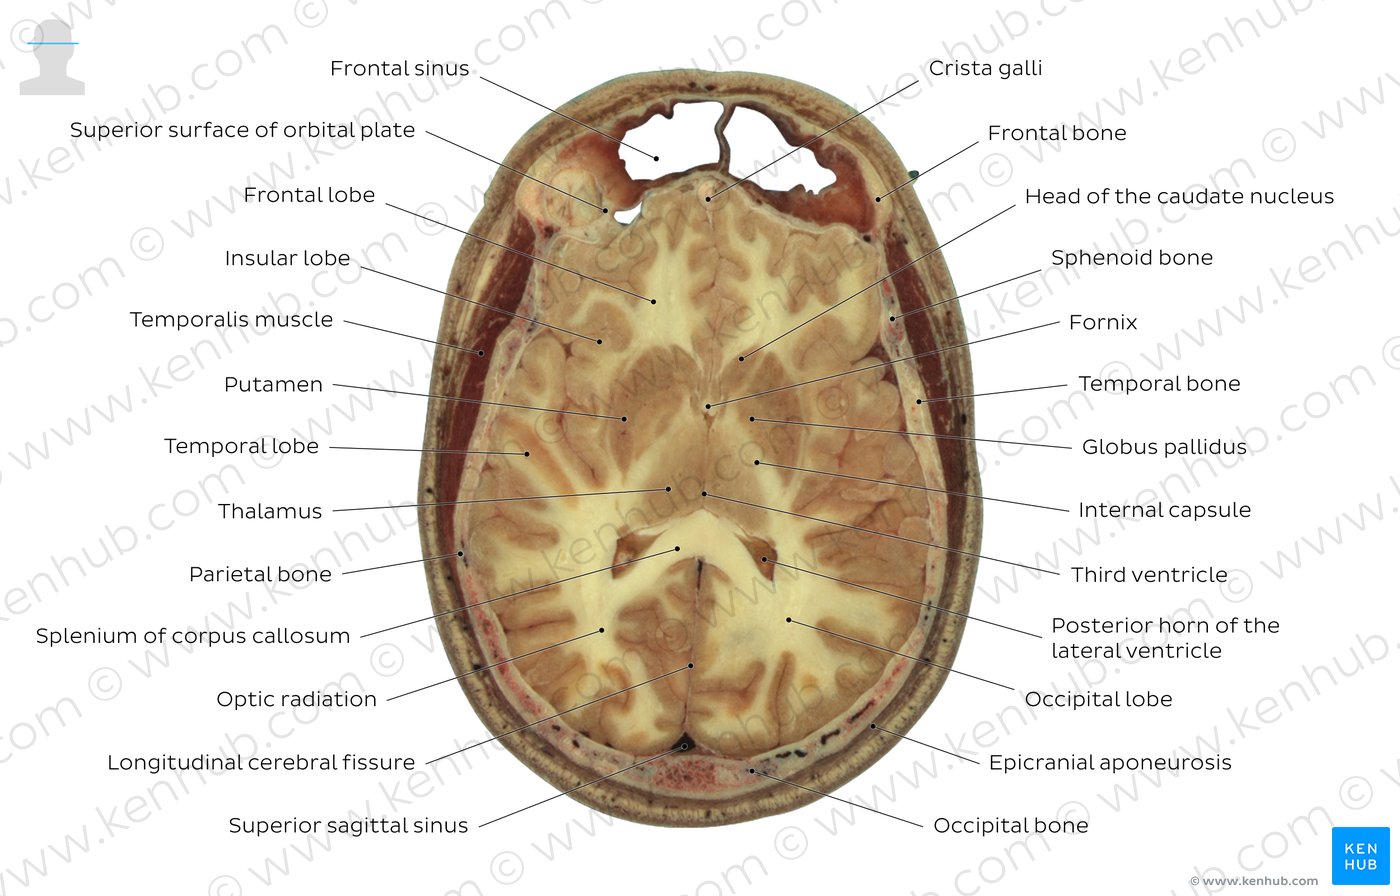 Cross section through the thalamus: Diagram